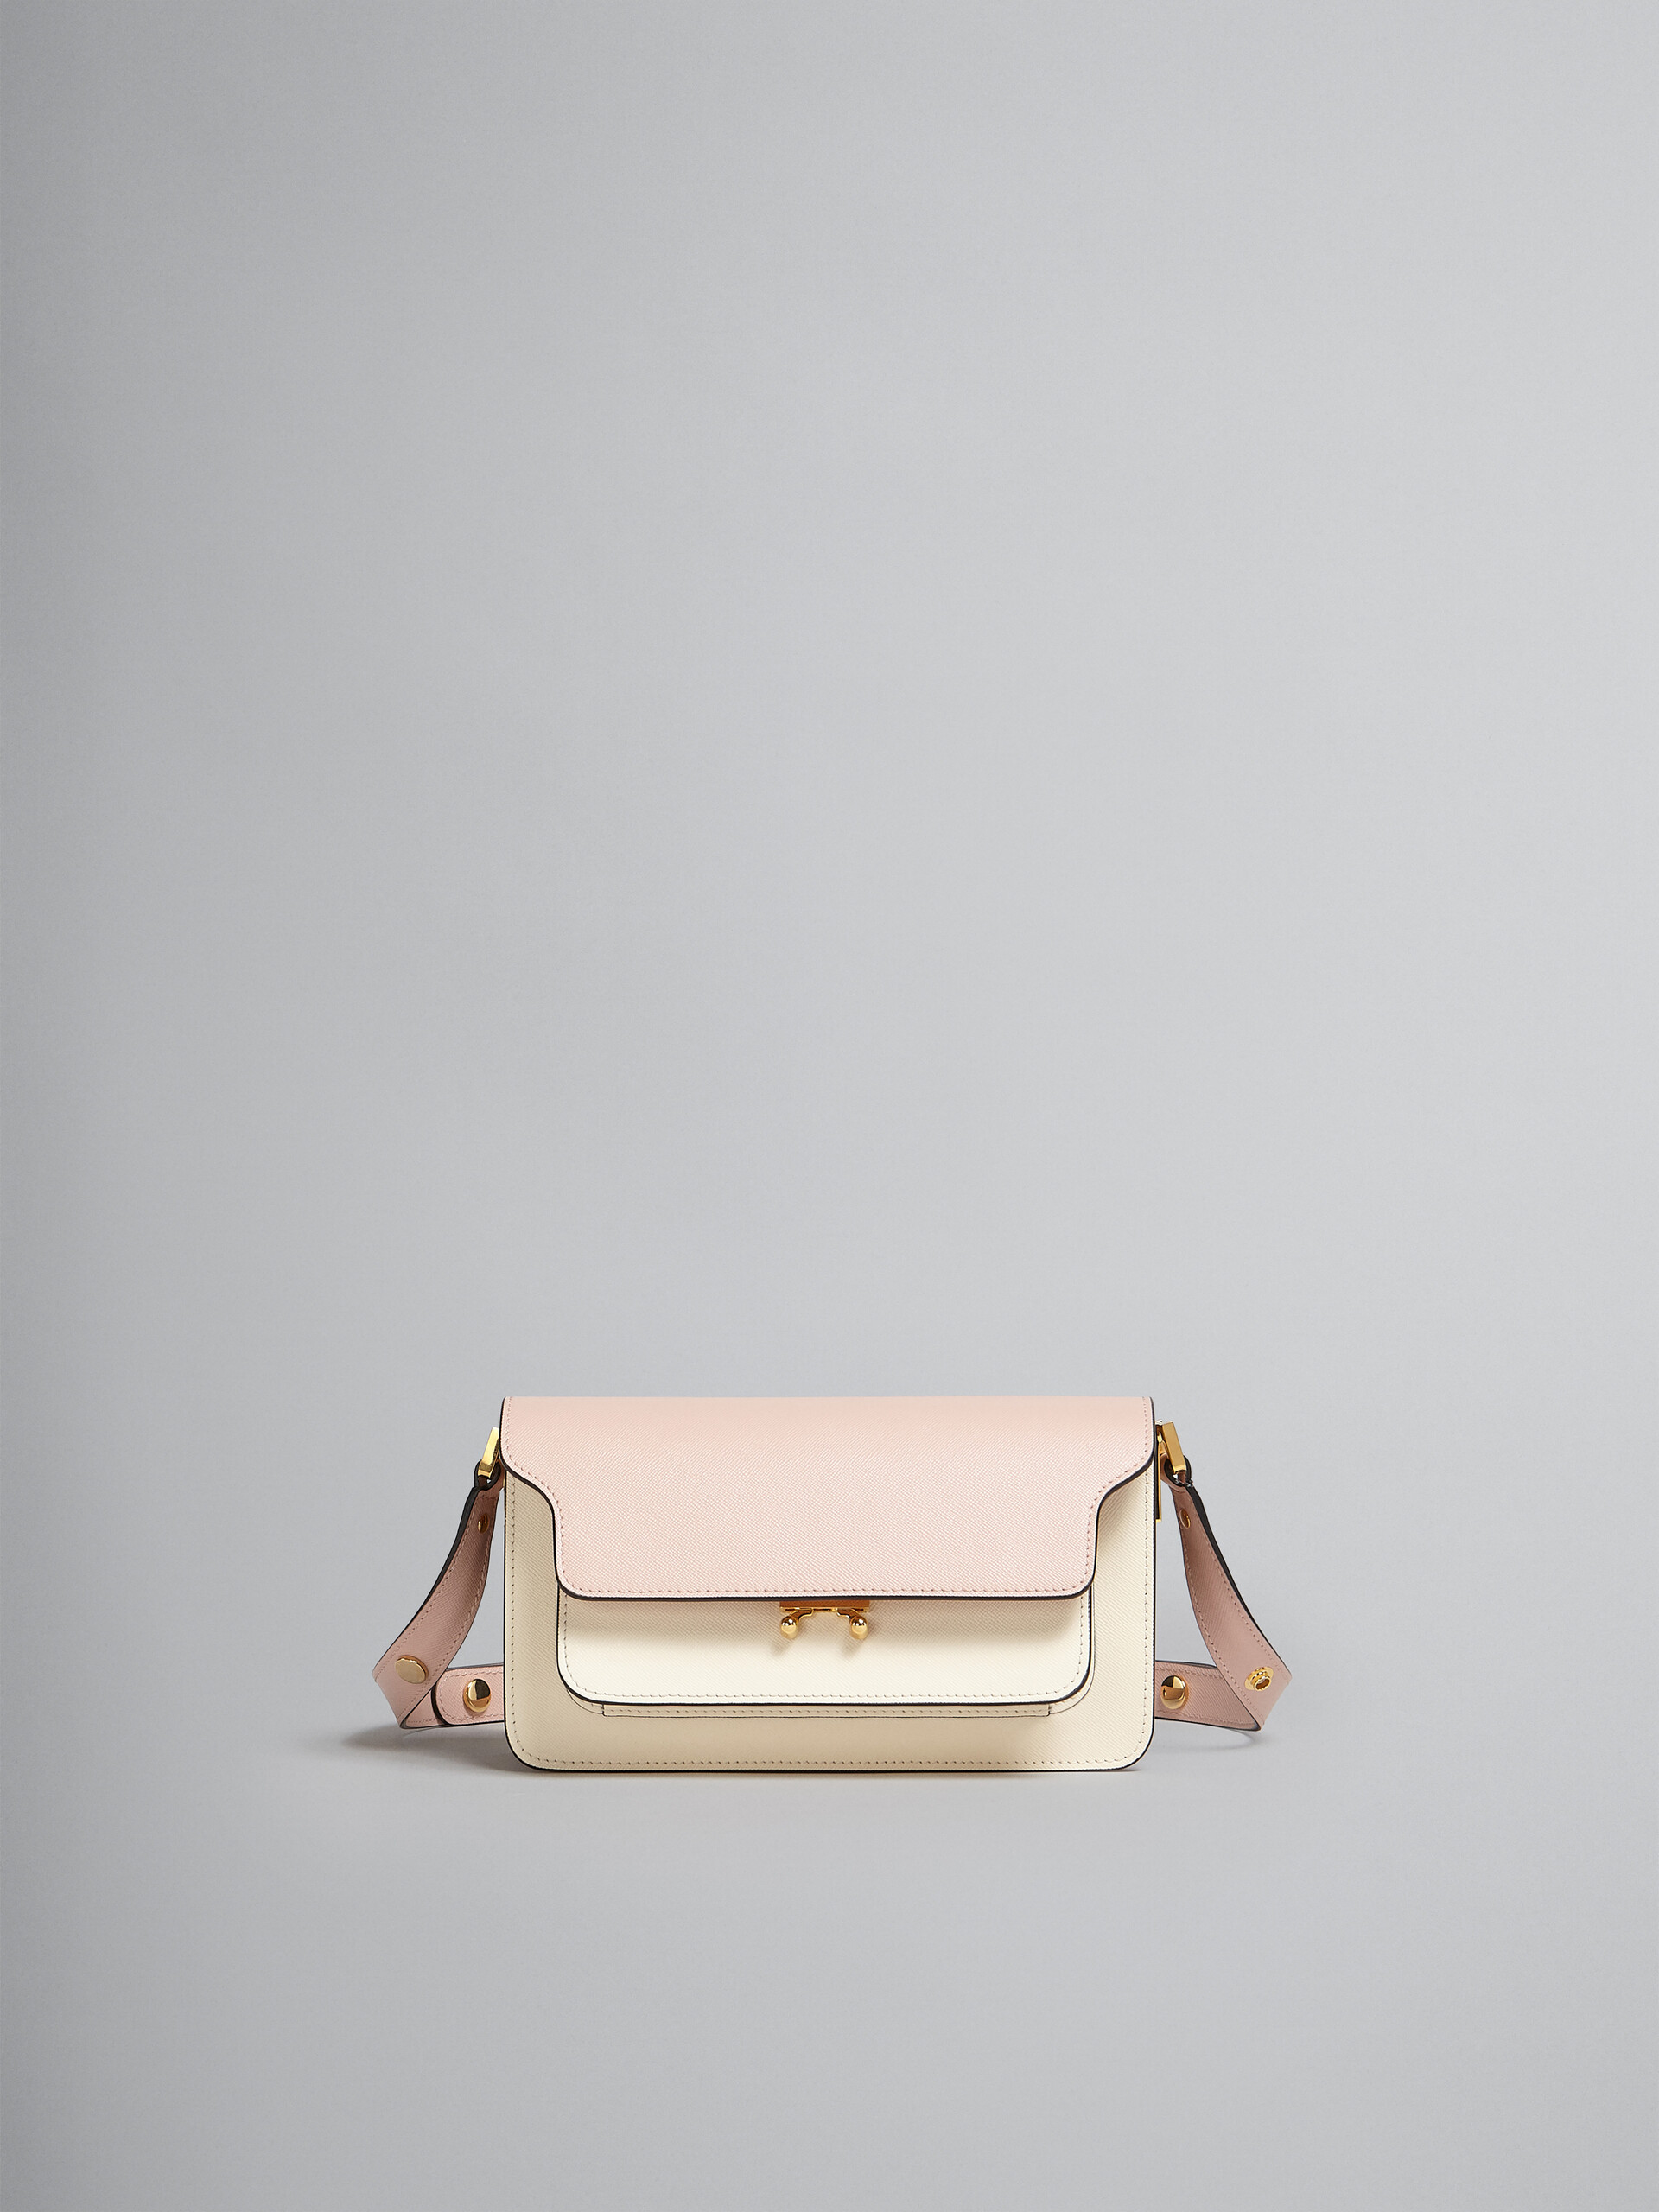 Marni Tan & Off-White Medium Tri Trunk Bag